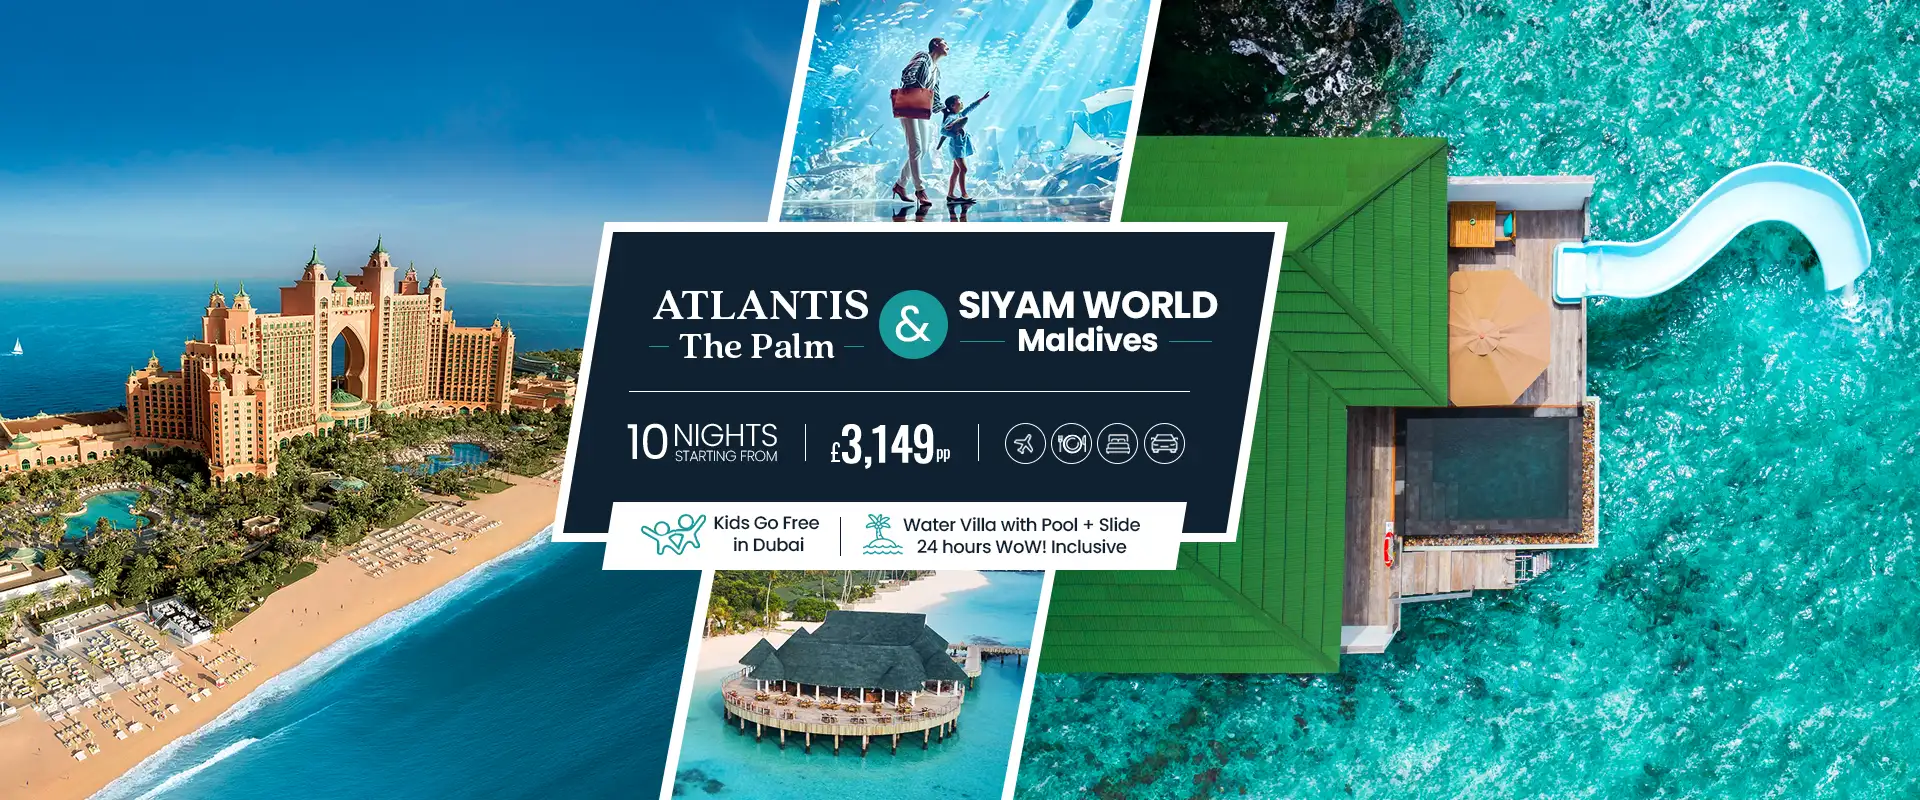 Atlantis, The Palm & Siyam World Maldives Deal